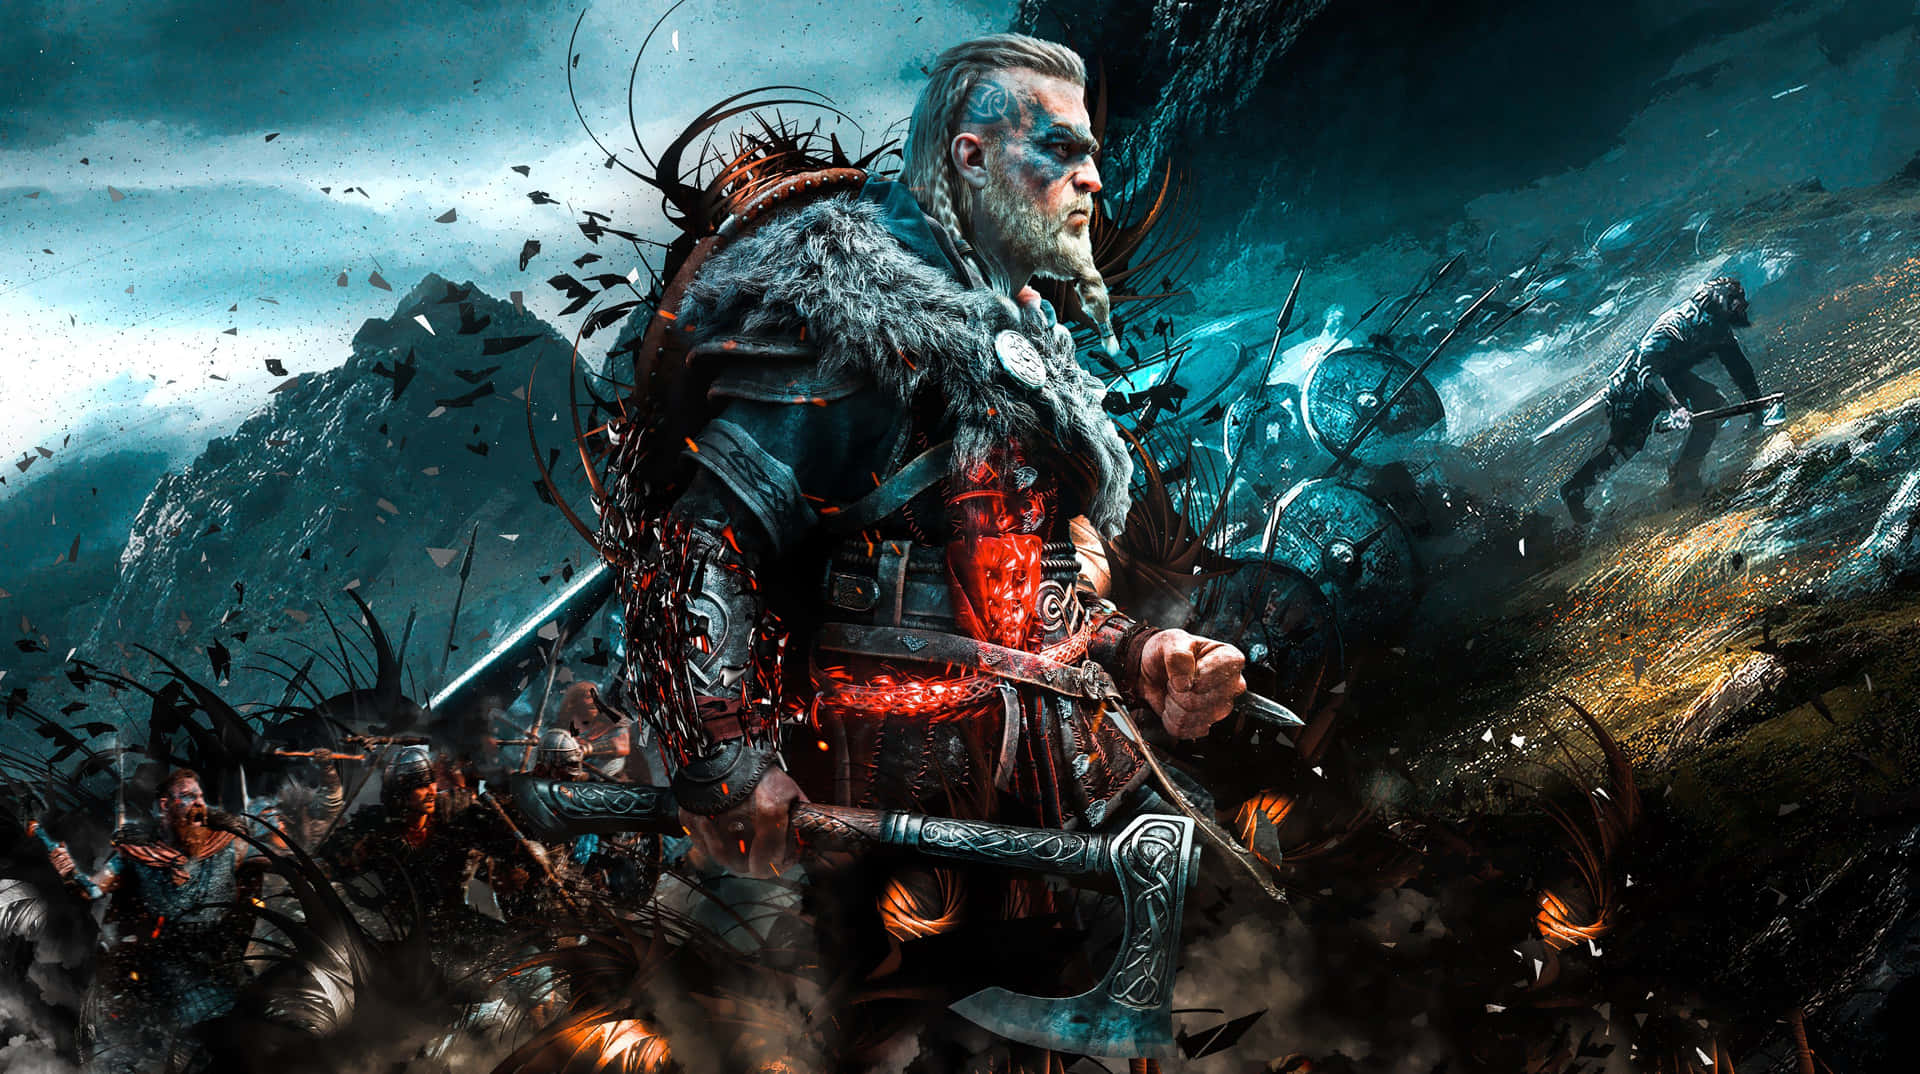 THOR God of War Ragnarök Cool Gaming Wallpaper, HD Games 4K Wallpapers,  Images and Background - Wallpapers Den